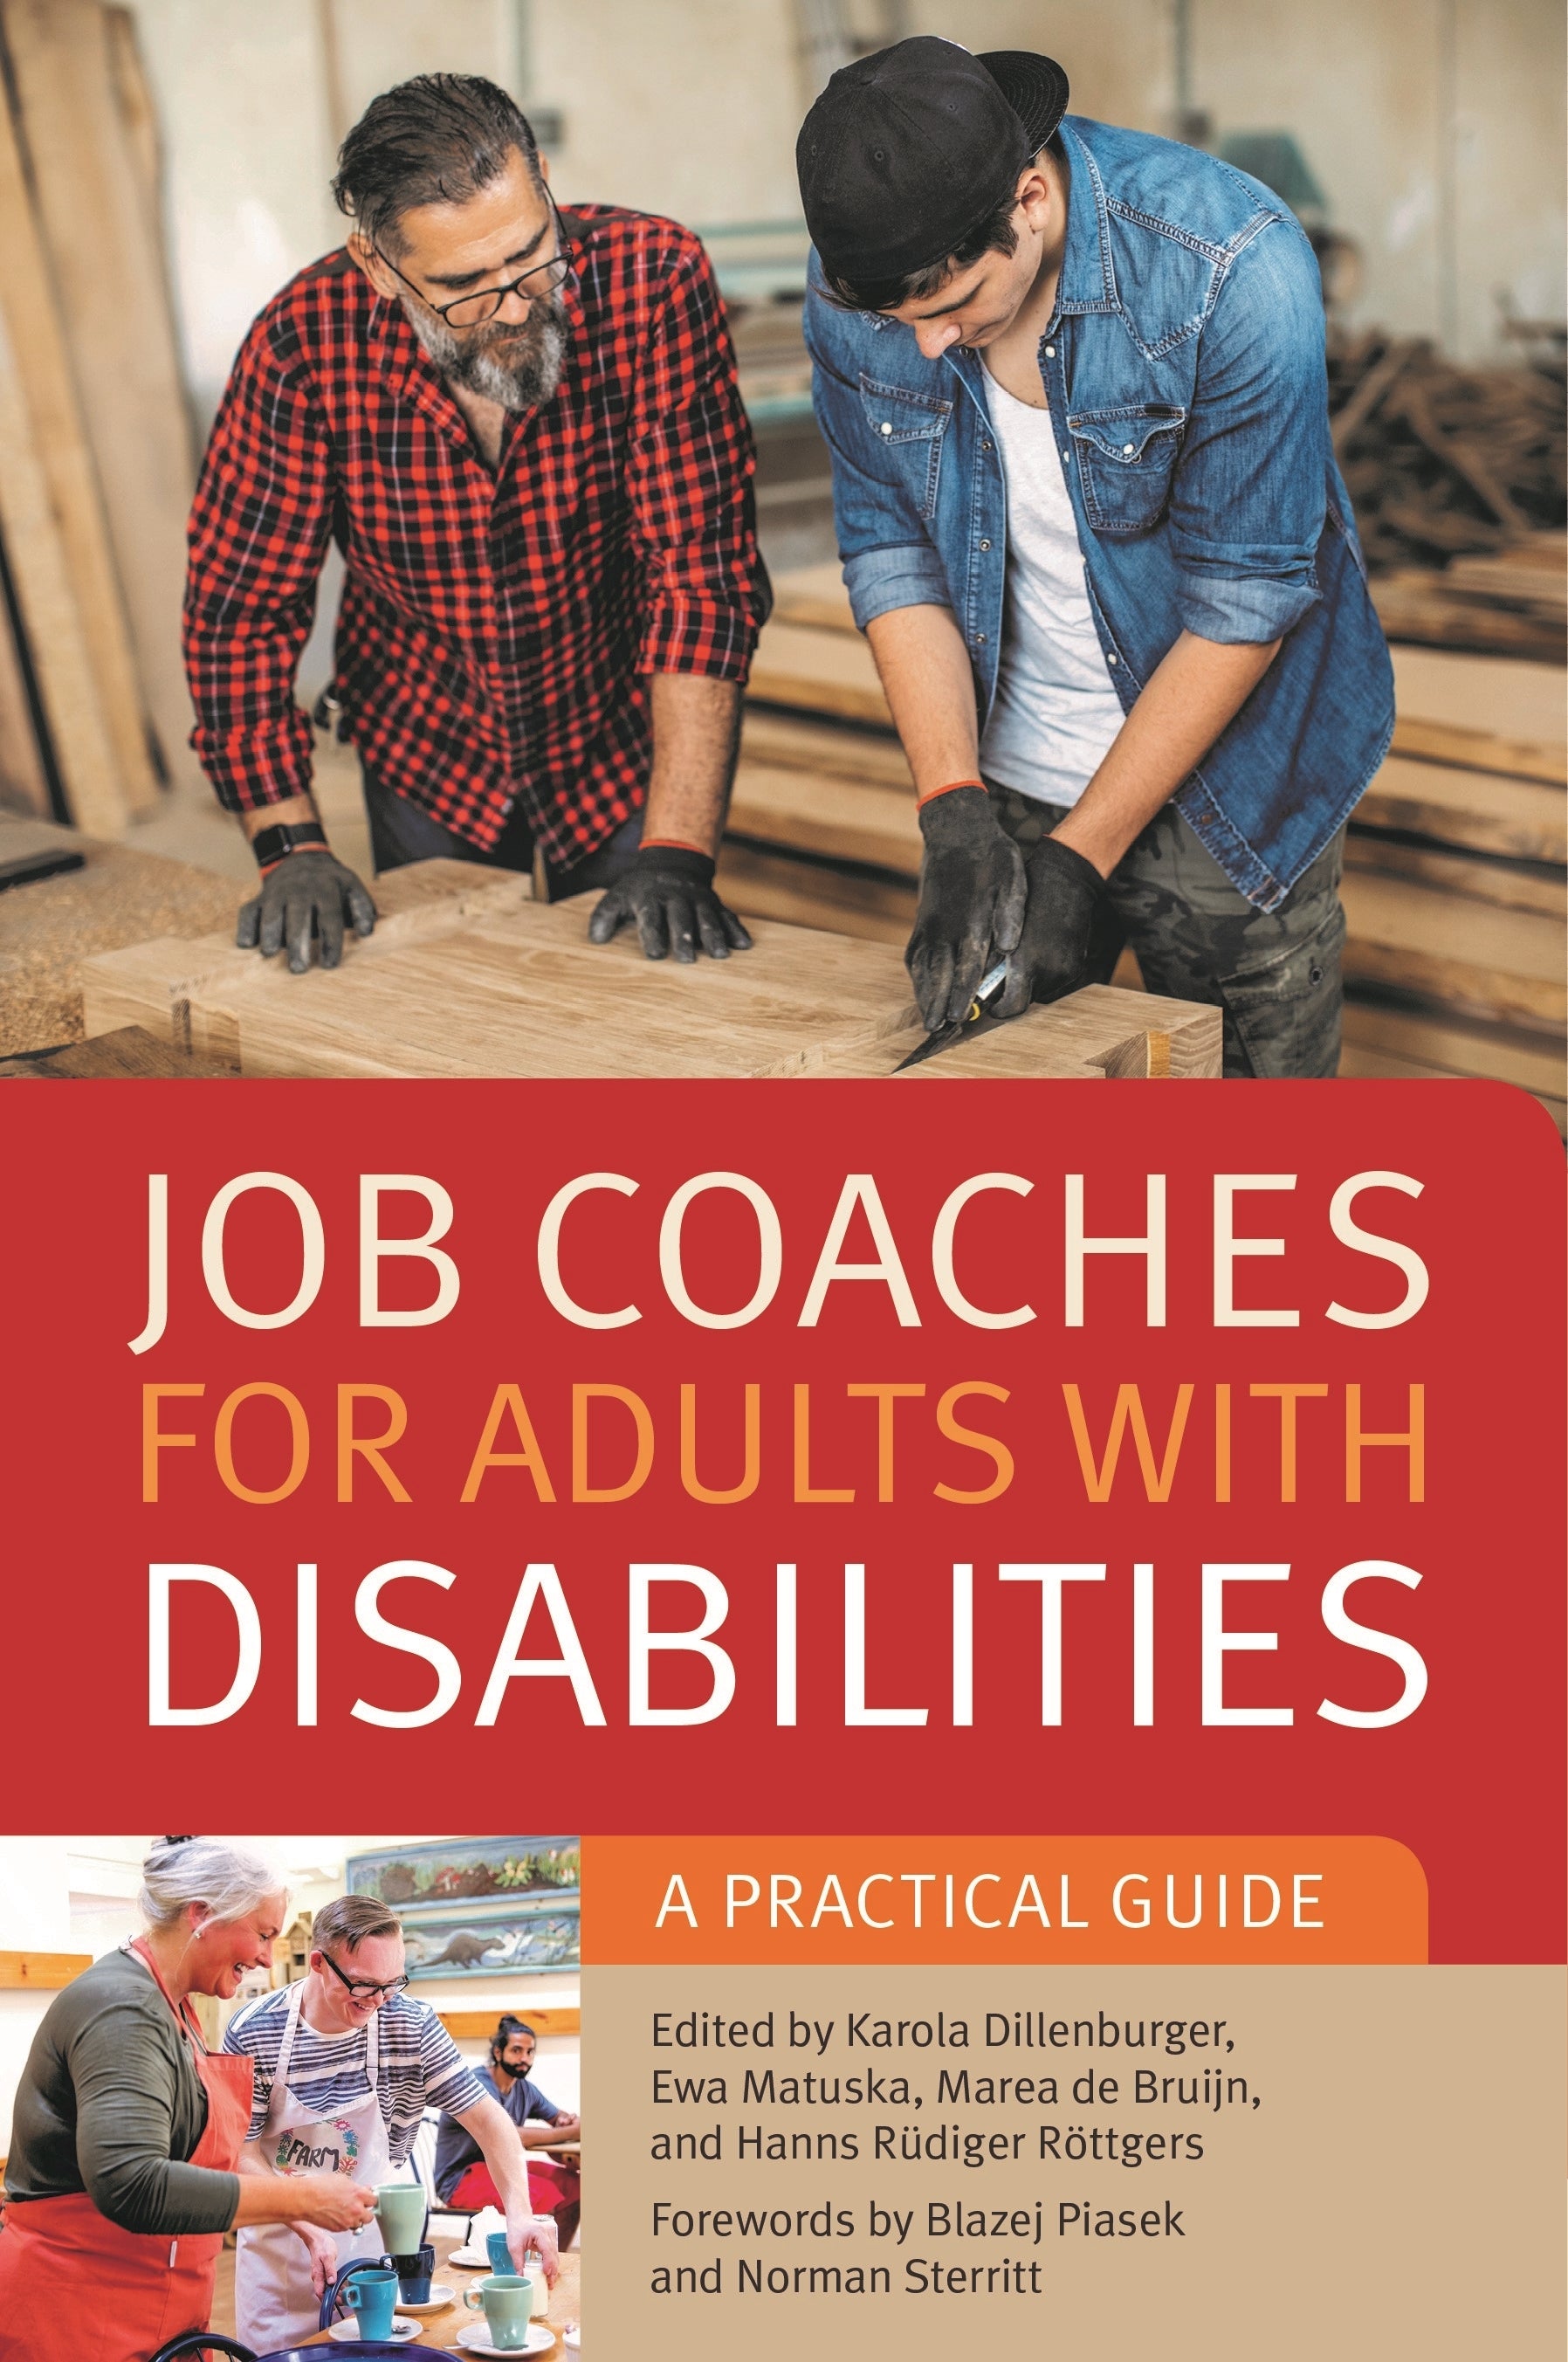 Job Coaches for Adults with Disabilities by Karola Dillenburger, Ewa Matuska, Marea de Bruijn, Hanns Rüdiger Röttgers, Blazej Piasek, Norman Sterritt, No Author Listed